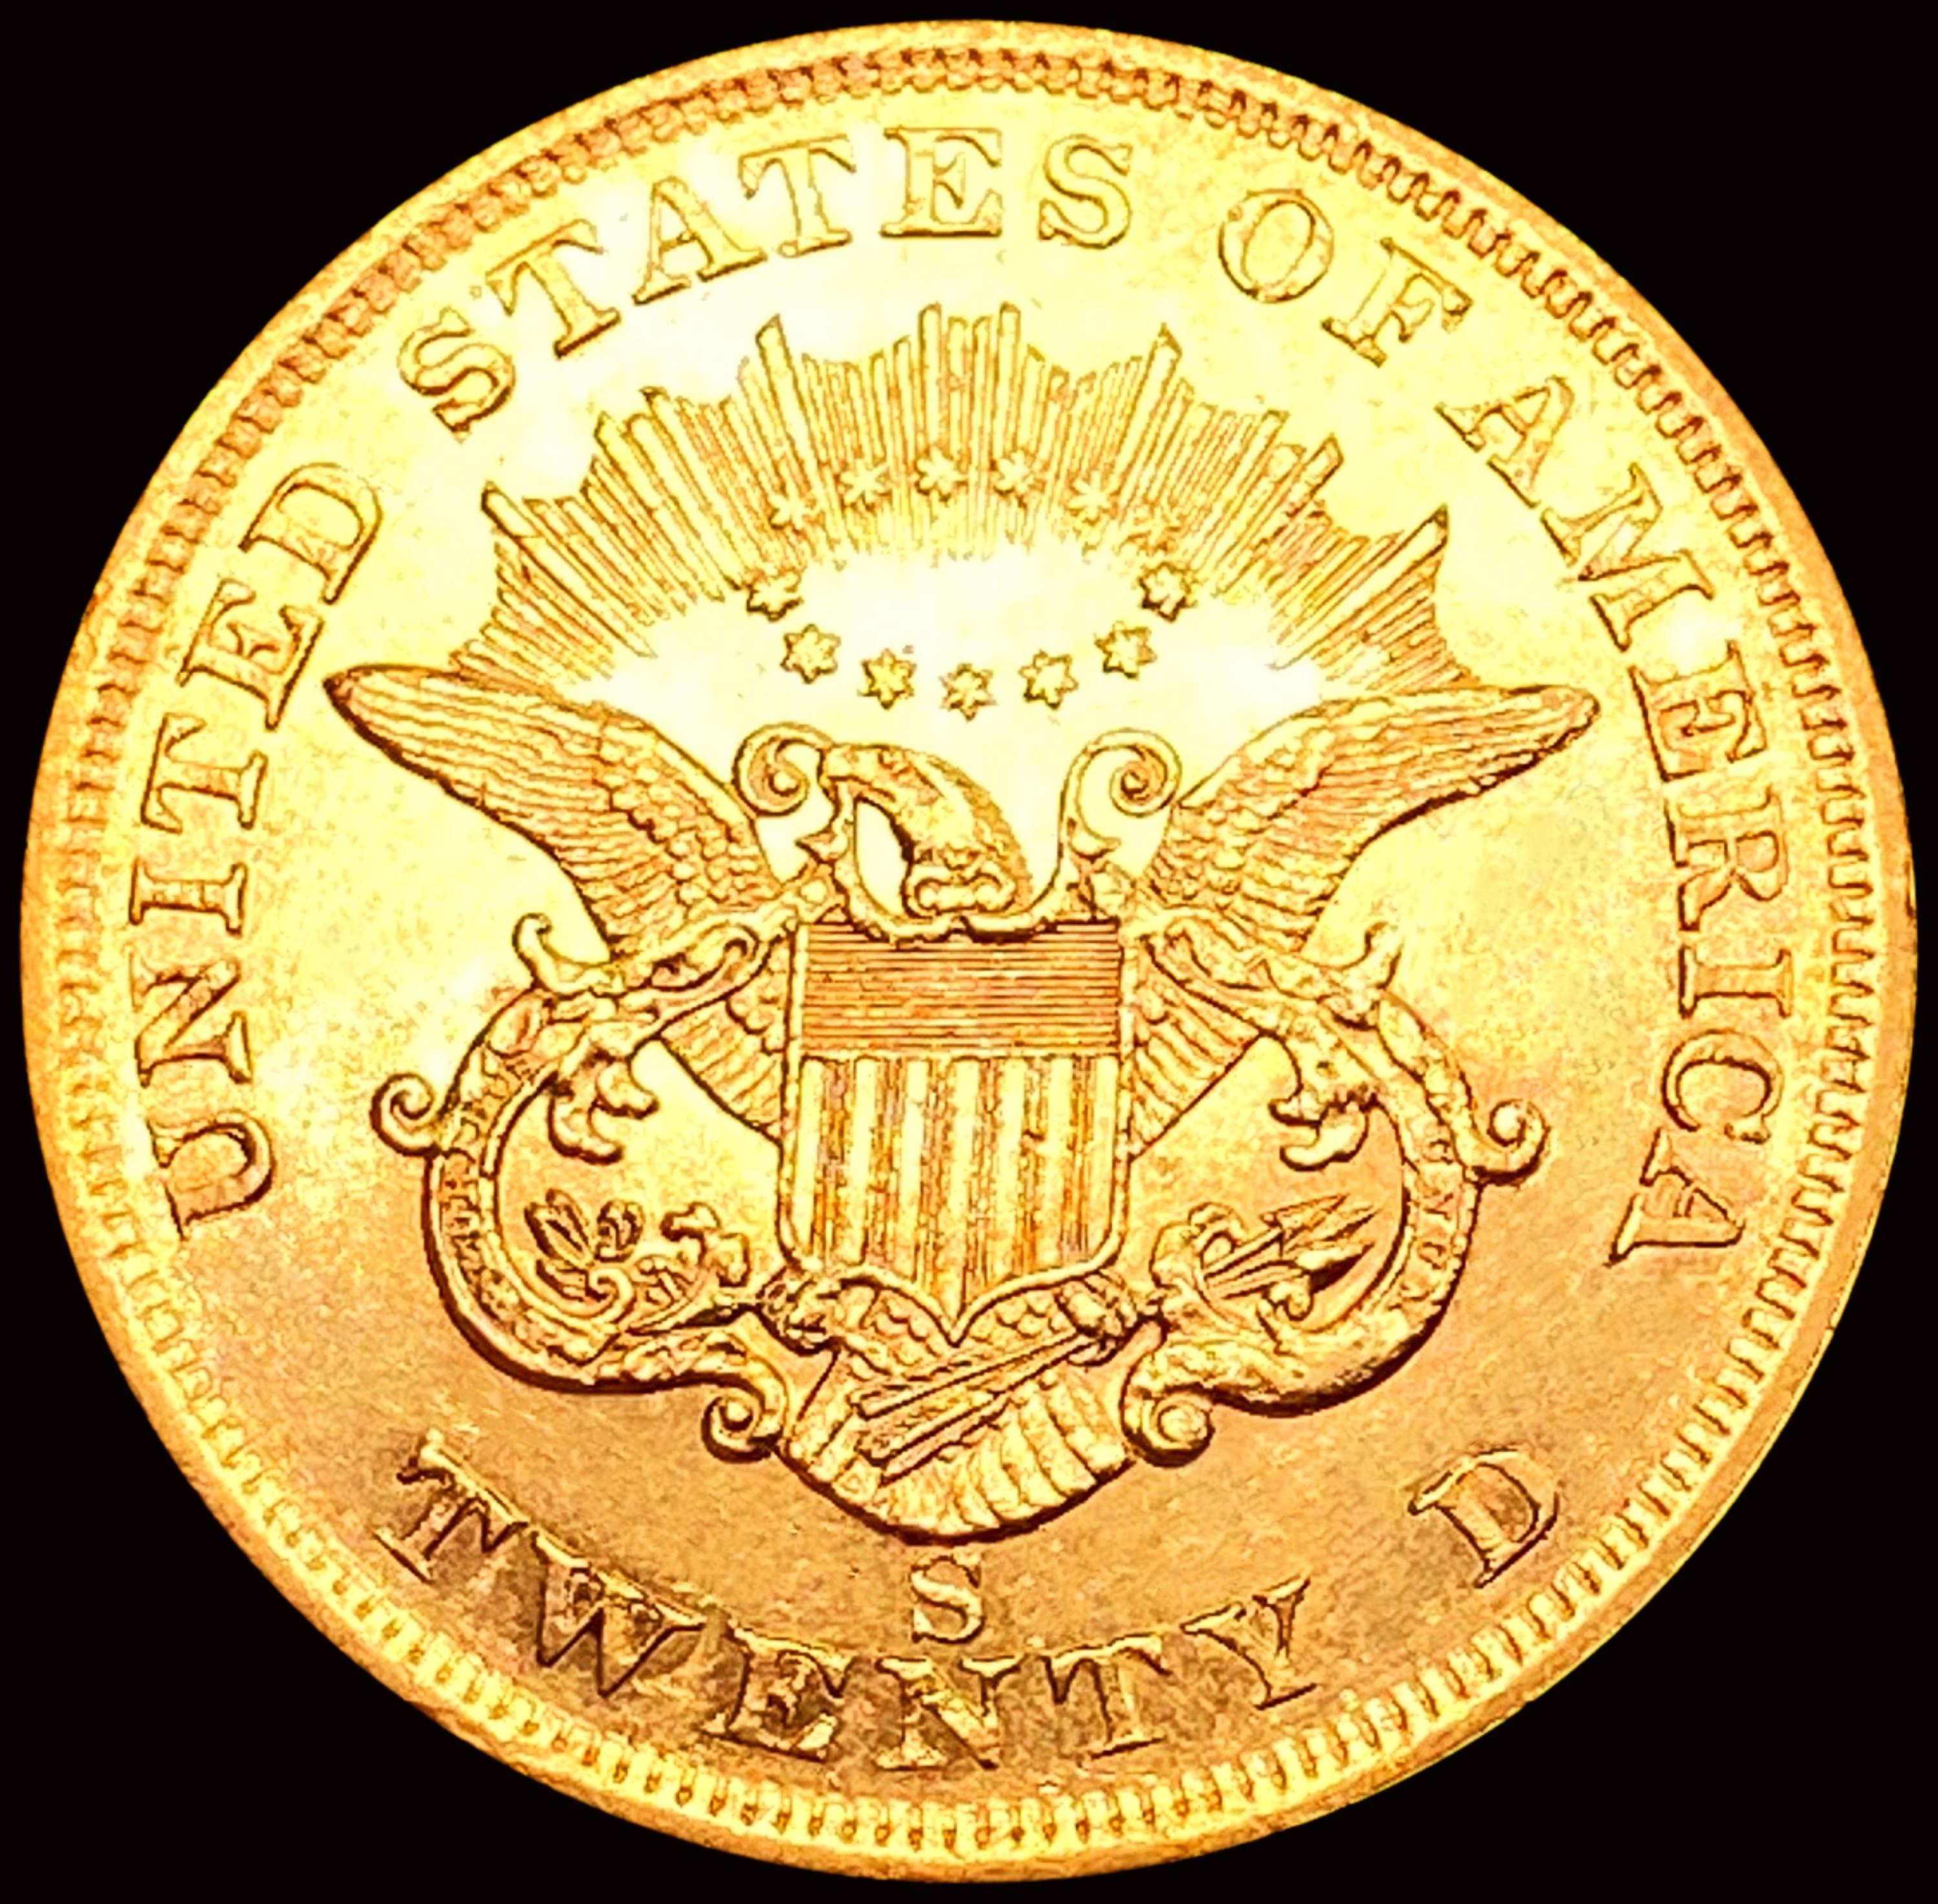 1854-S $20 Gold Double Eagle CHOICE BU